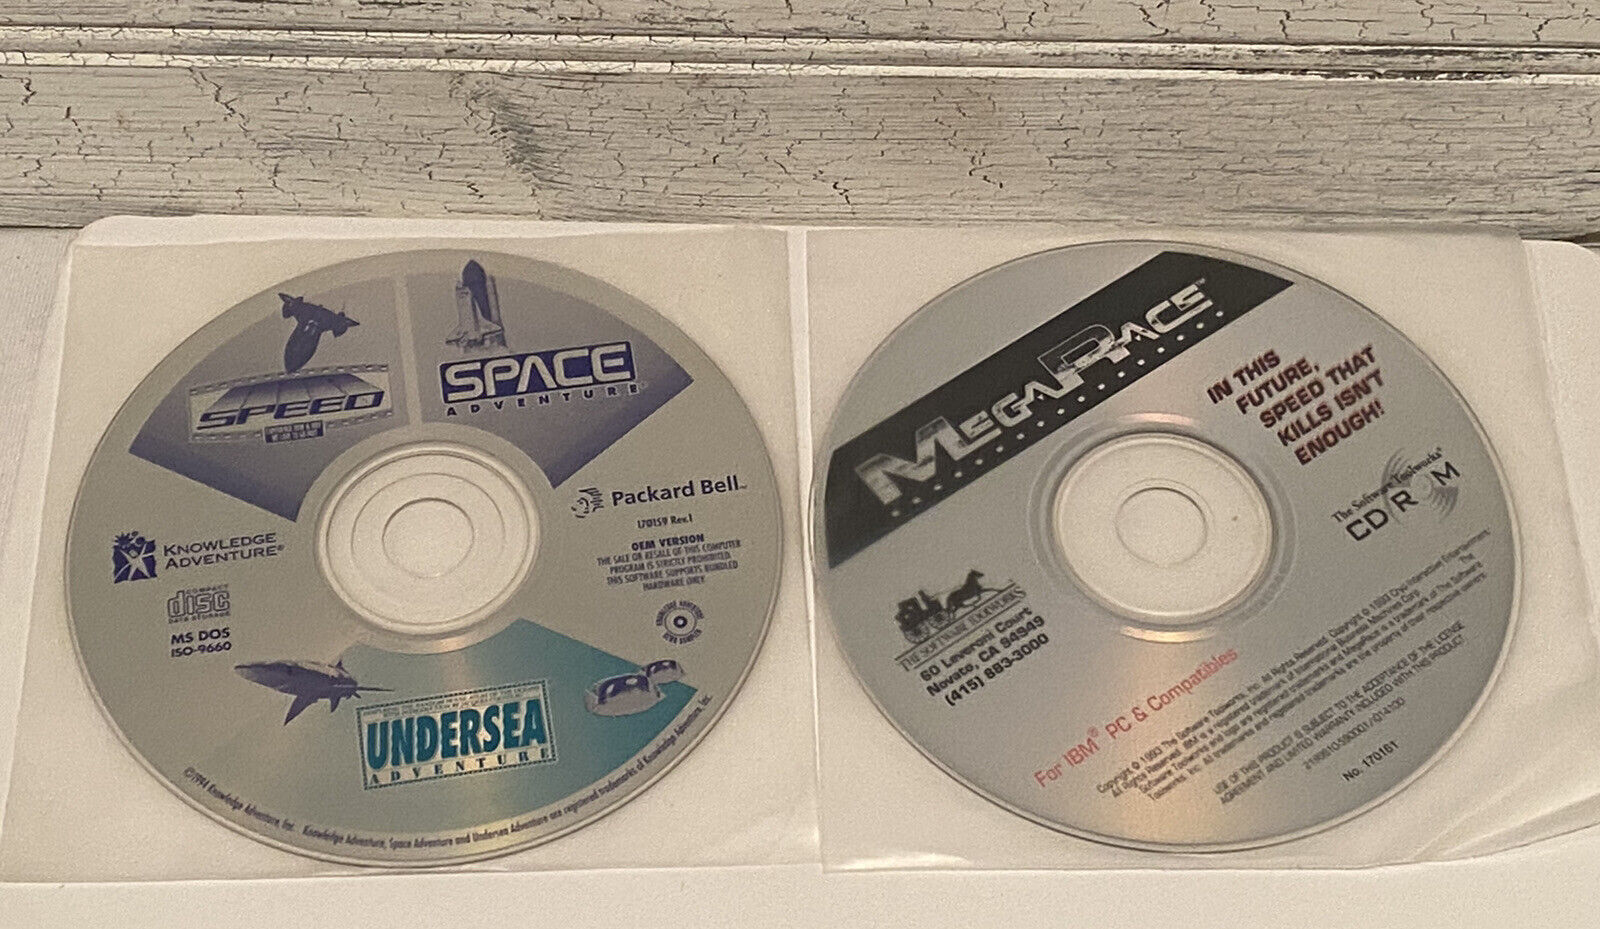 Lot of 2 Vintage PC Games - Space adventure, Undersea Adventure, Speed, MegaRace